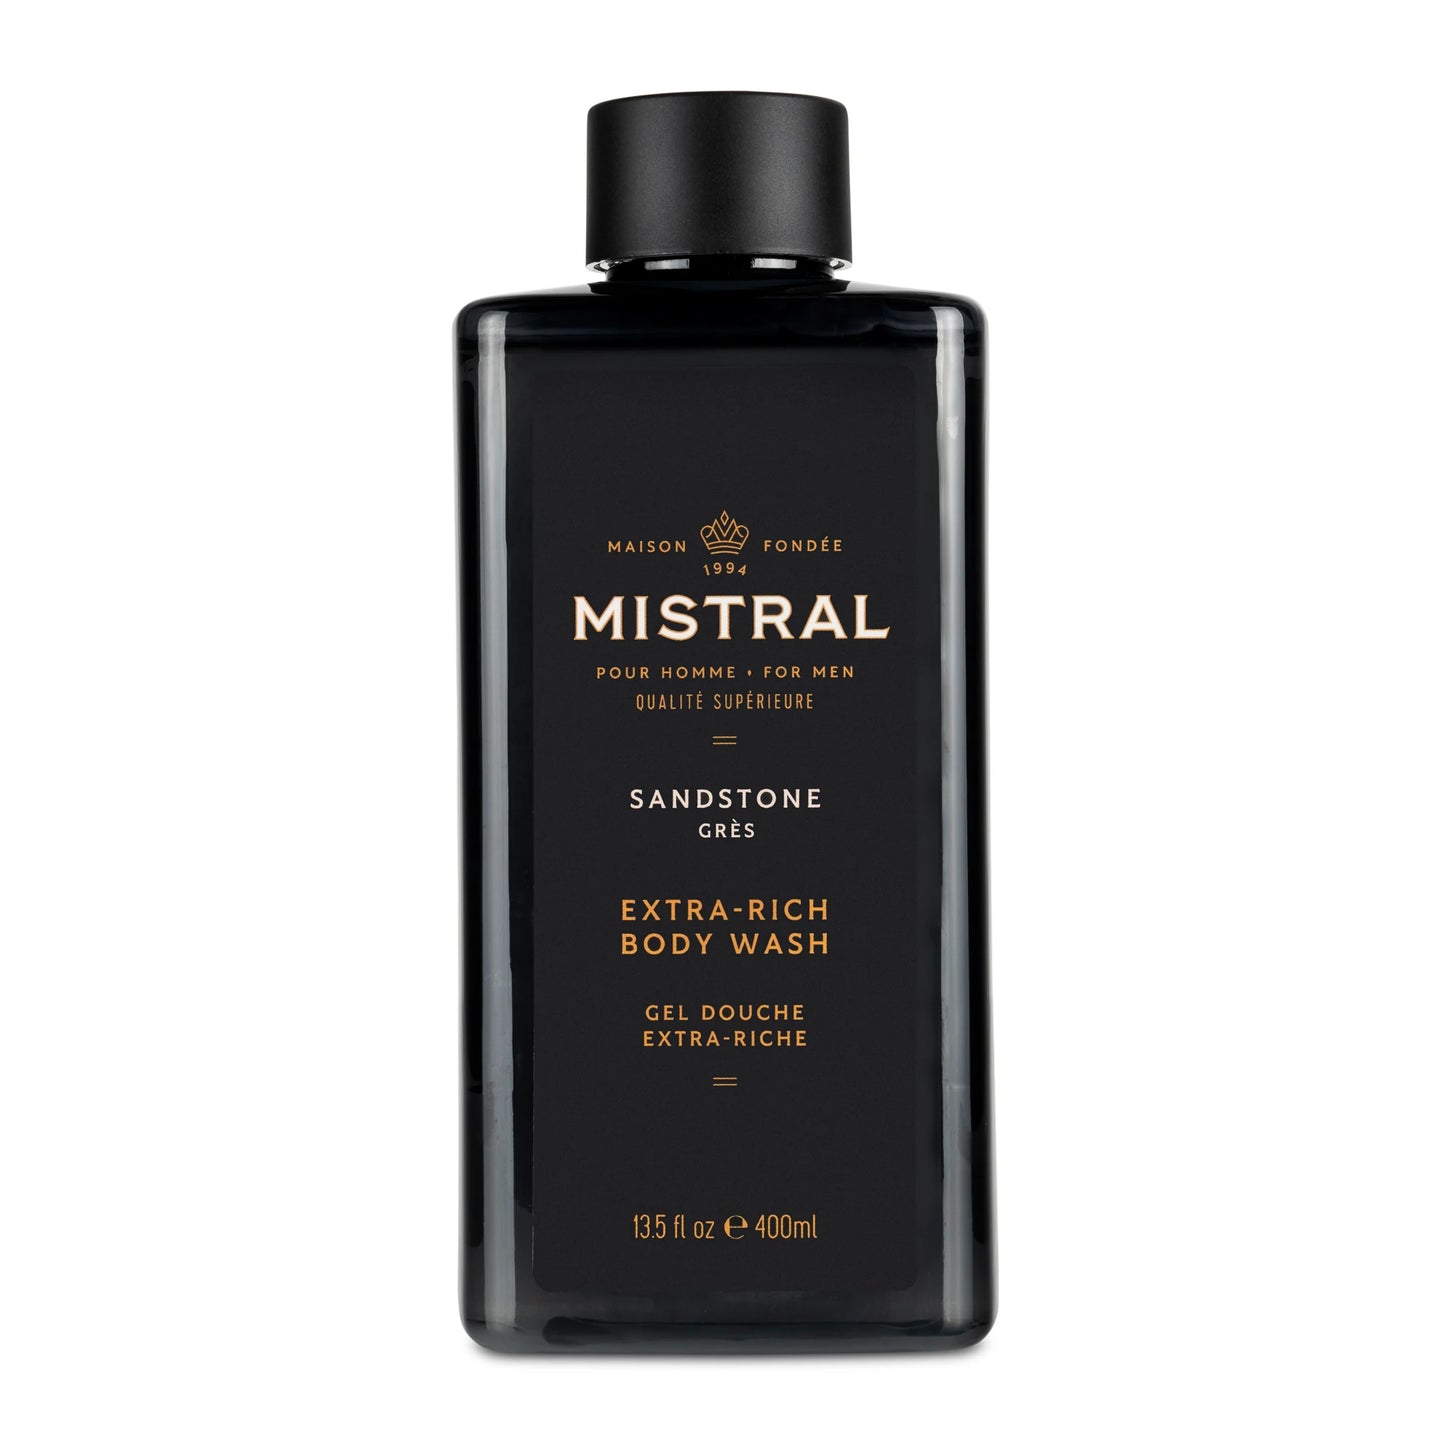 Mistral Men's Body Wash